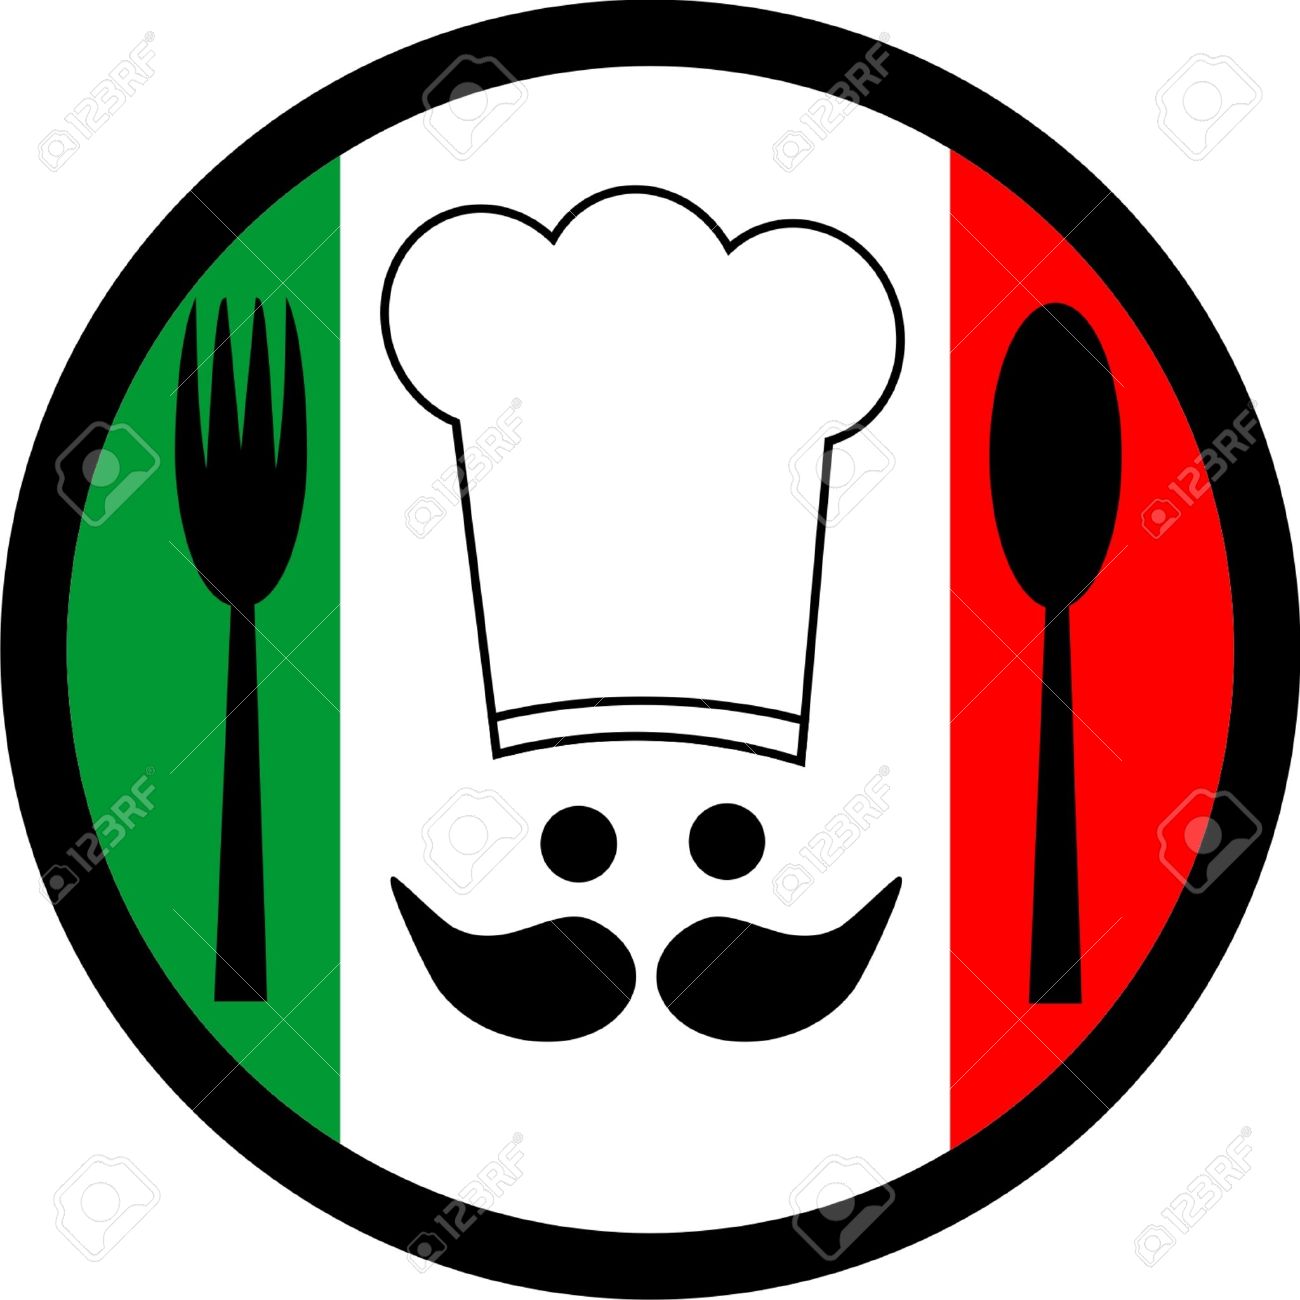 italian clipart meal italian